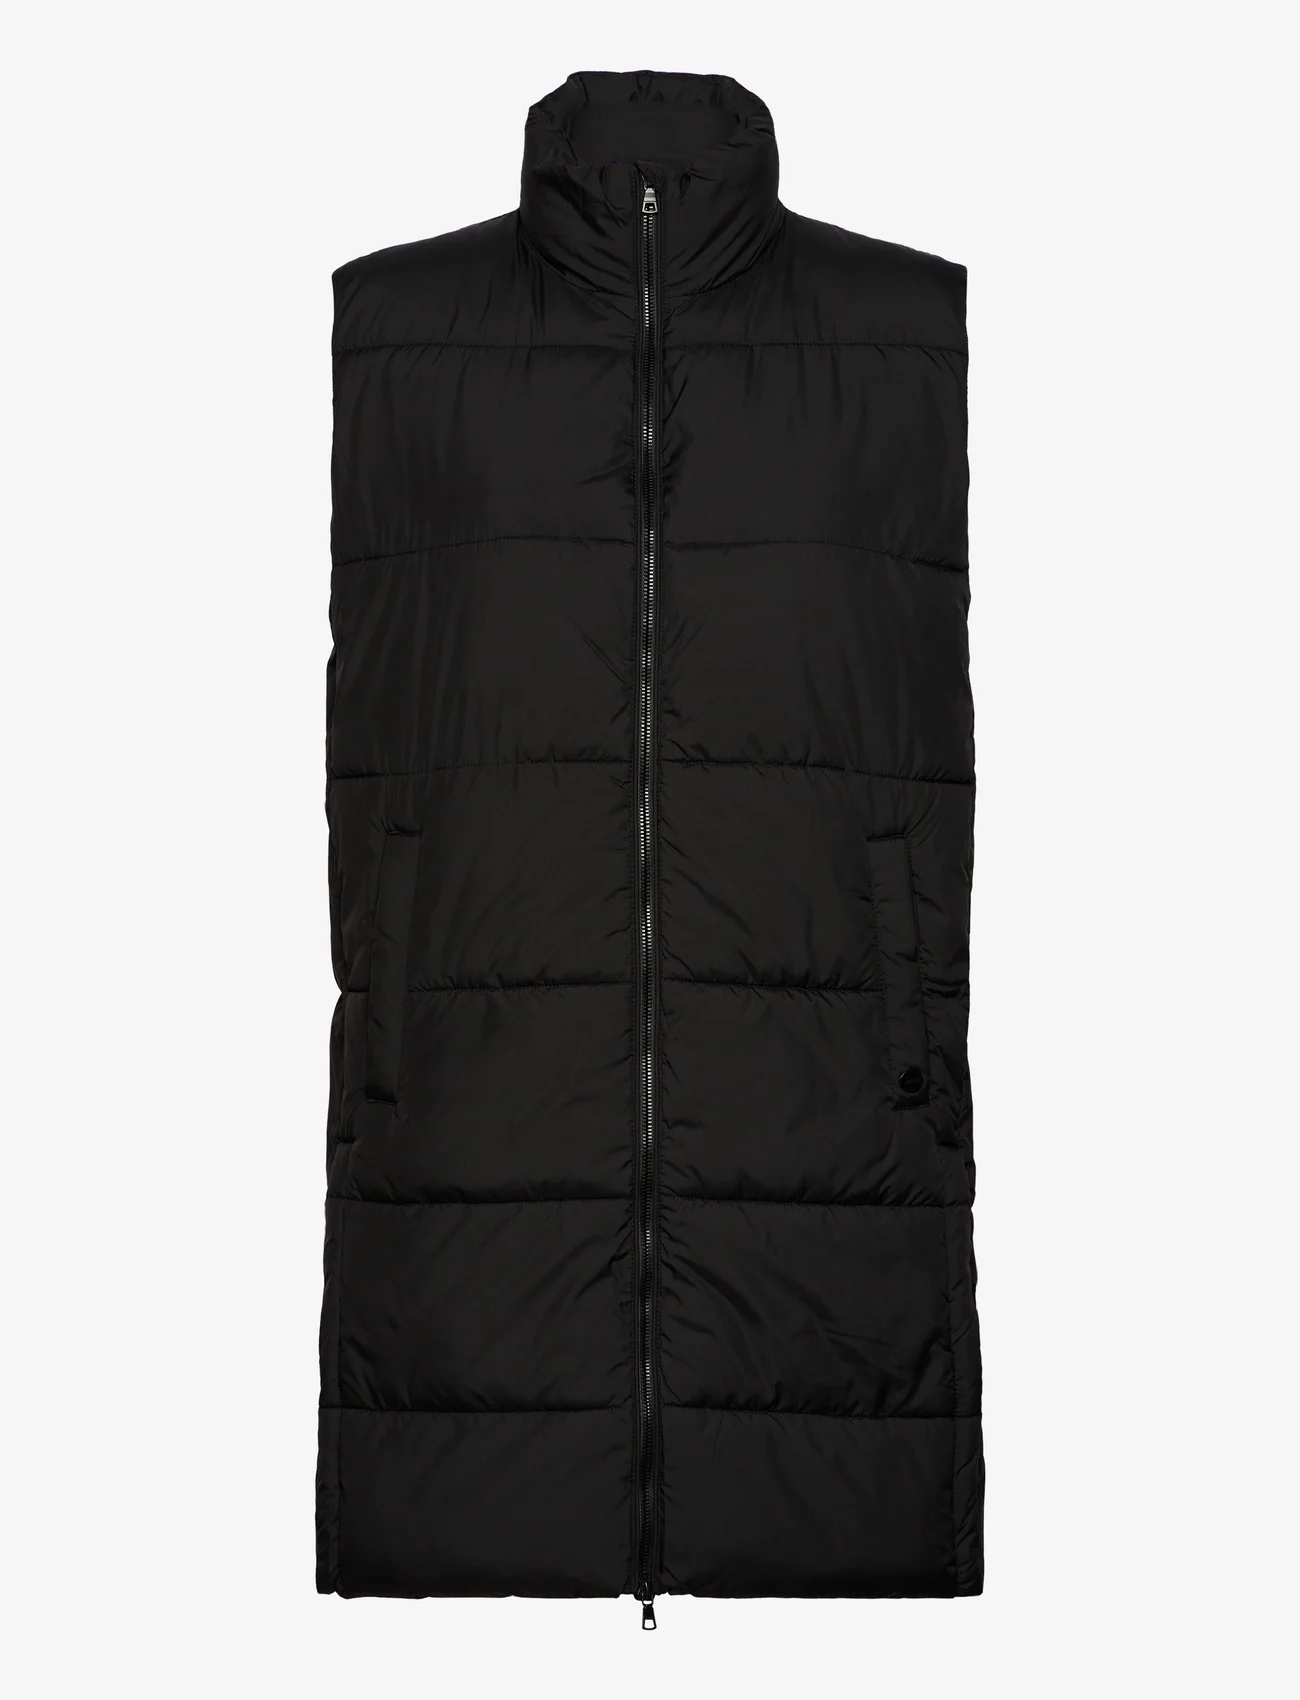 Superdry - STUDIOS LONGLINE QUILTED GILET - puffer vests - black - 0